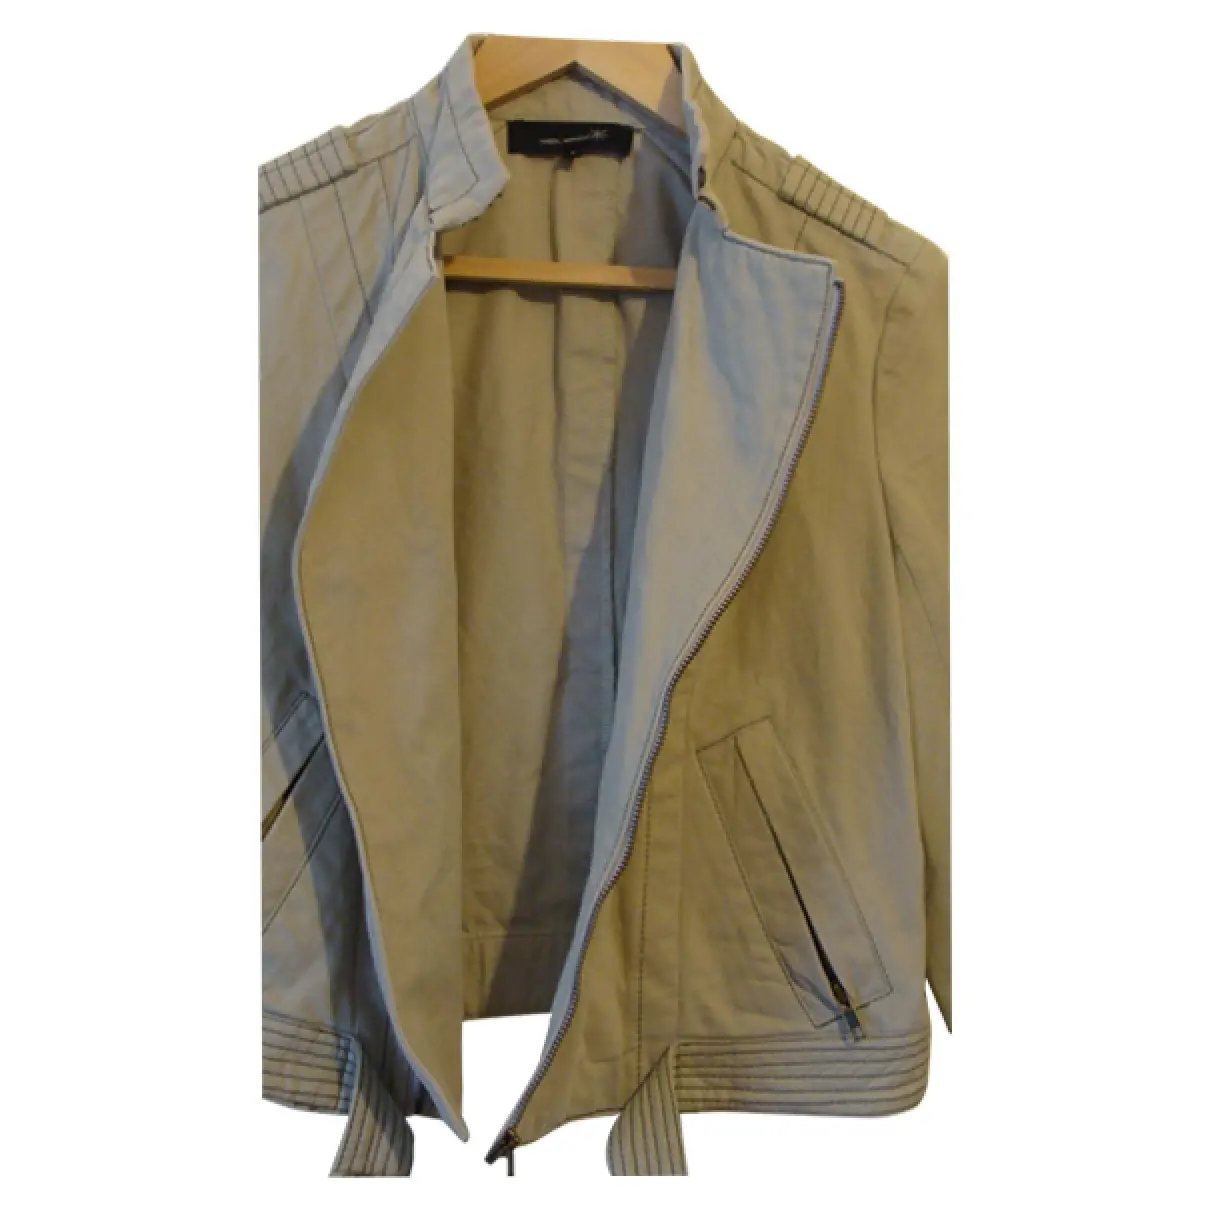 Buy Isabel Marant Beige Cotton Jacket online